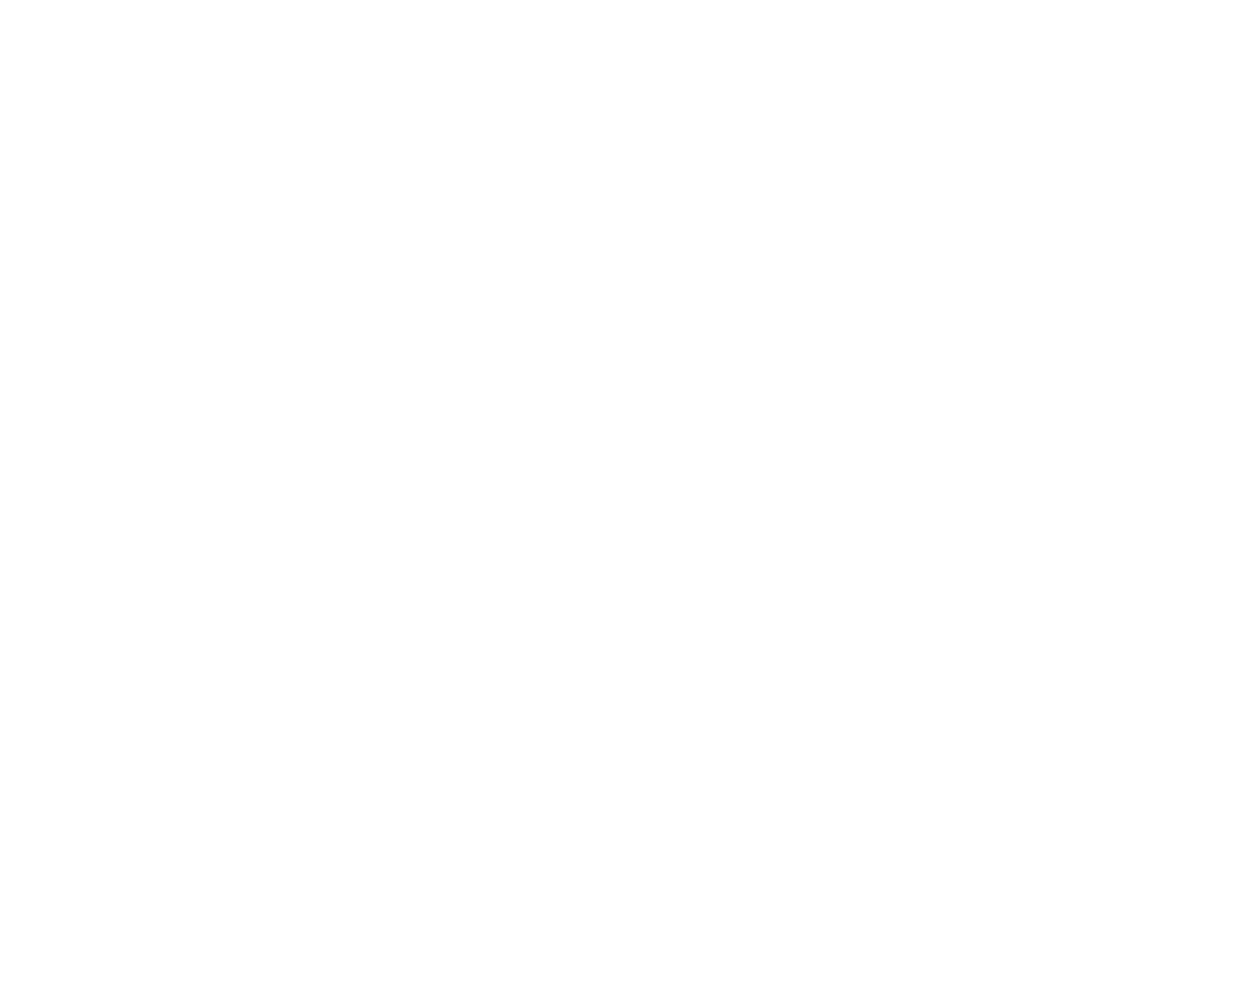 South Carolina Christian Foundation